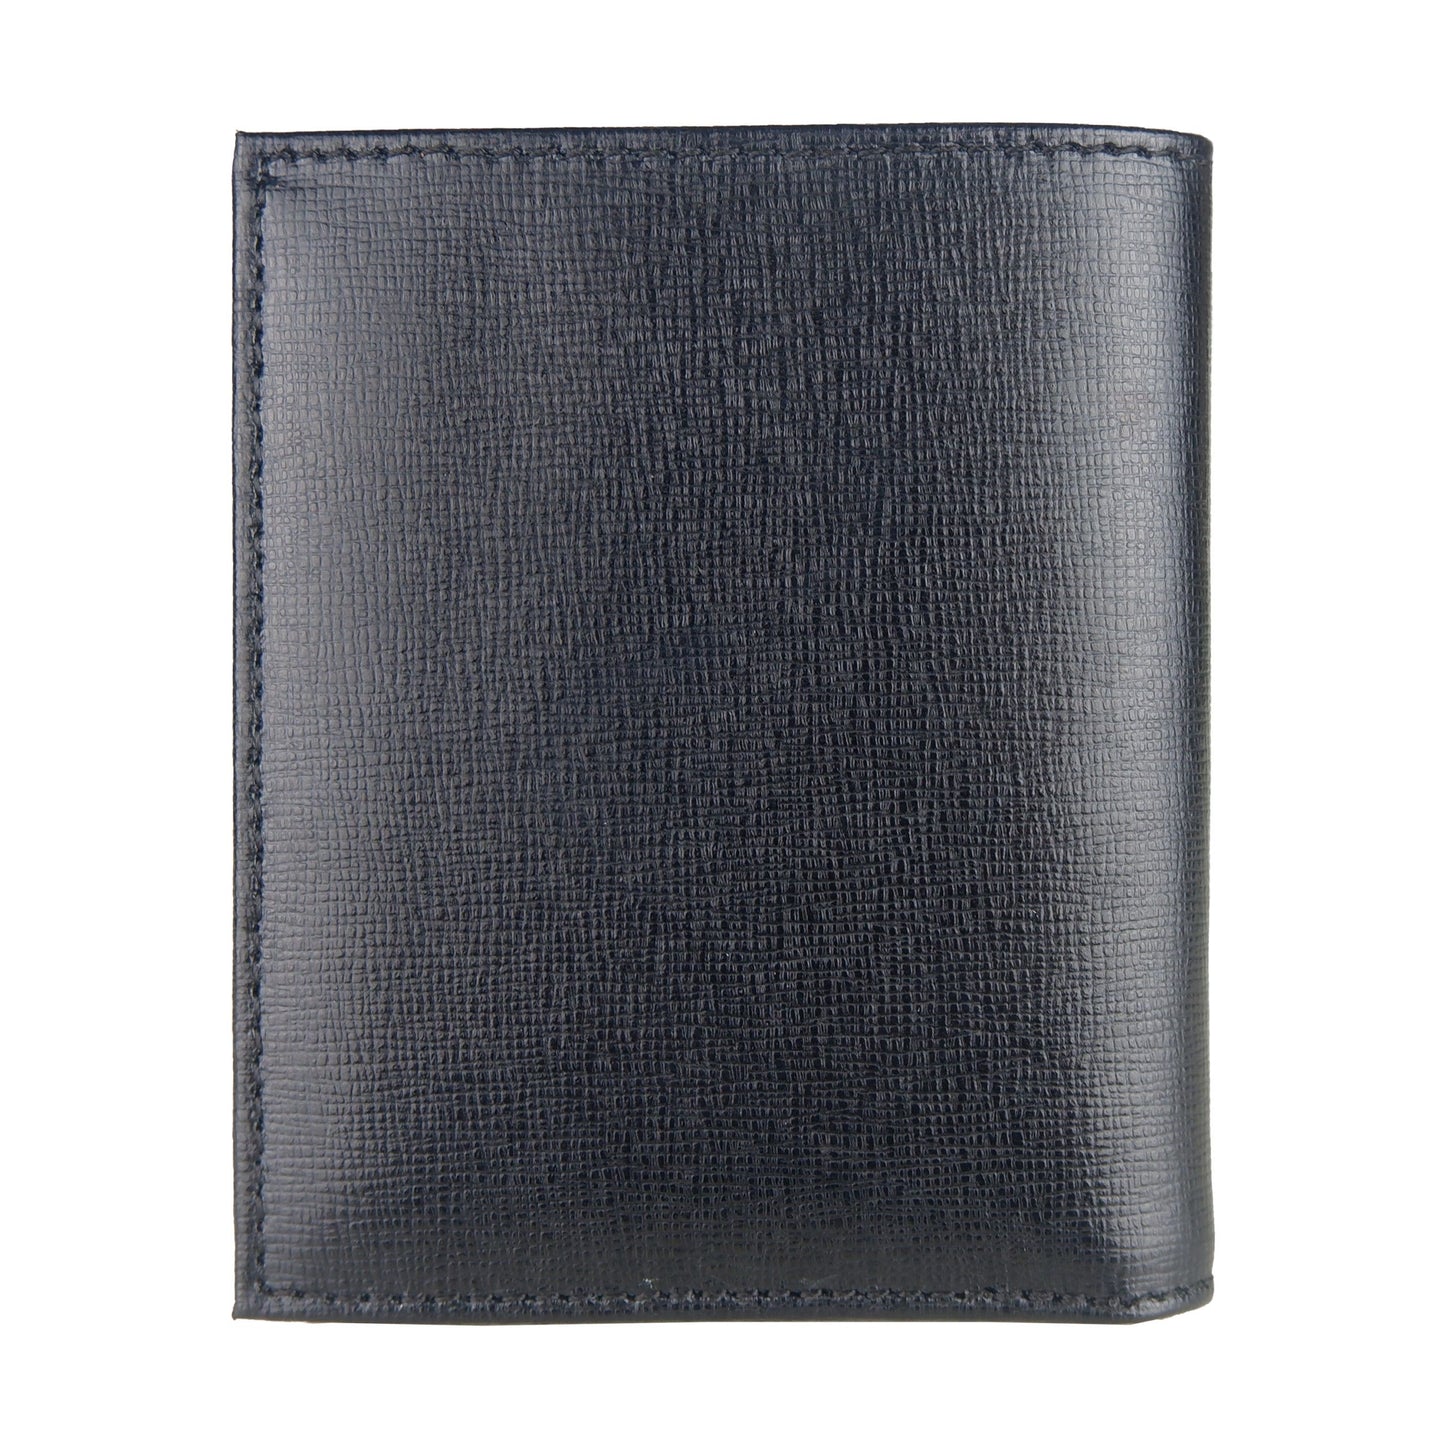 Sleek Black Calfskin Leather Wallet